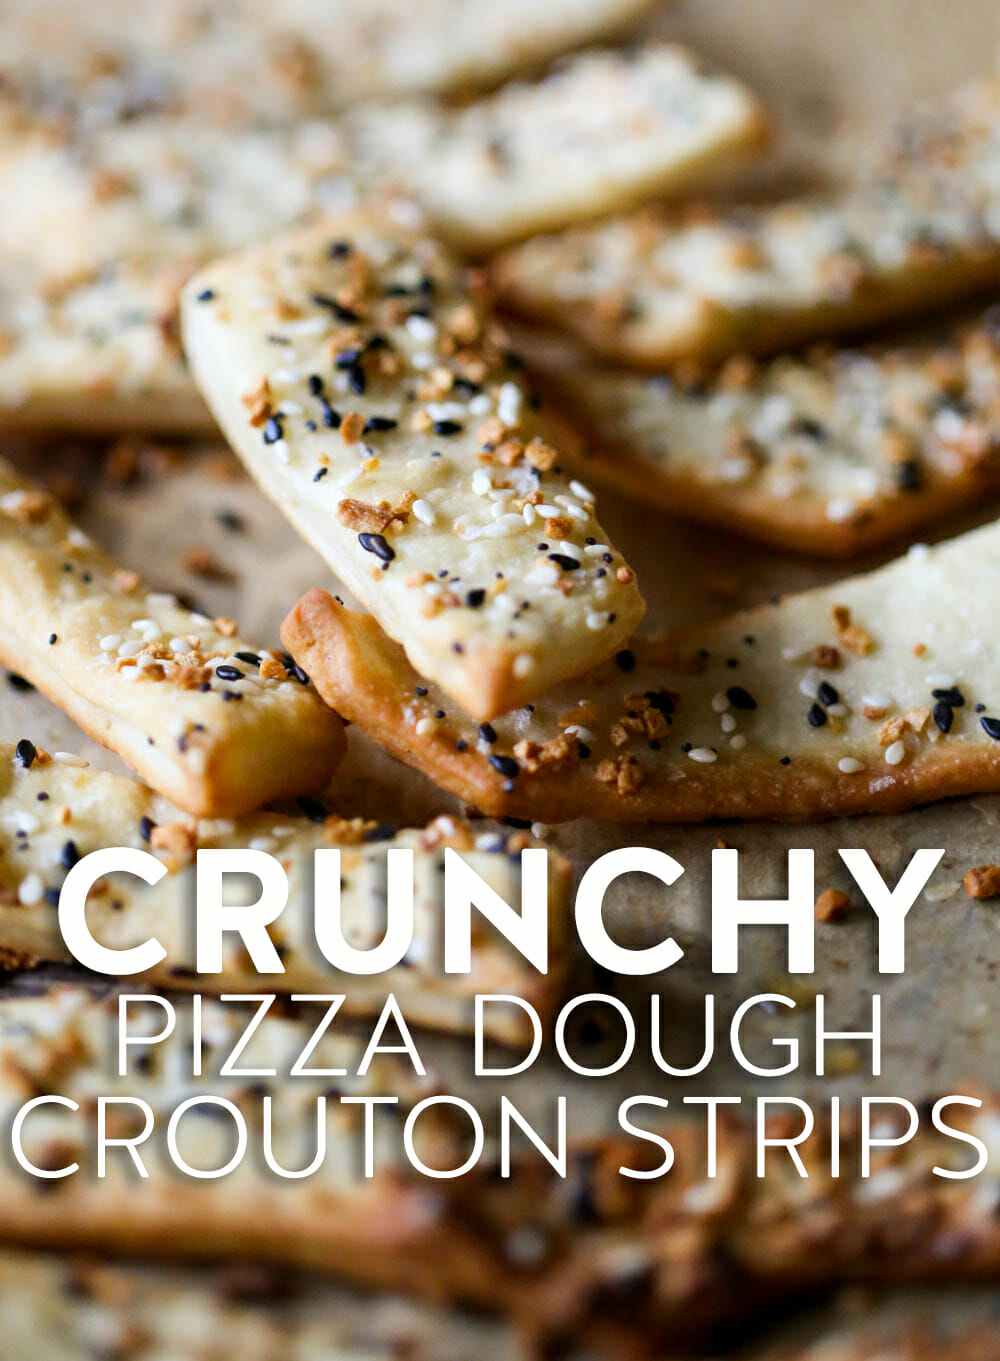 Crunchy Pizza Dough Crouton Strips